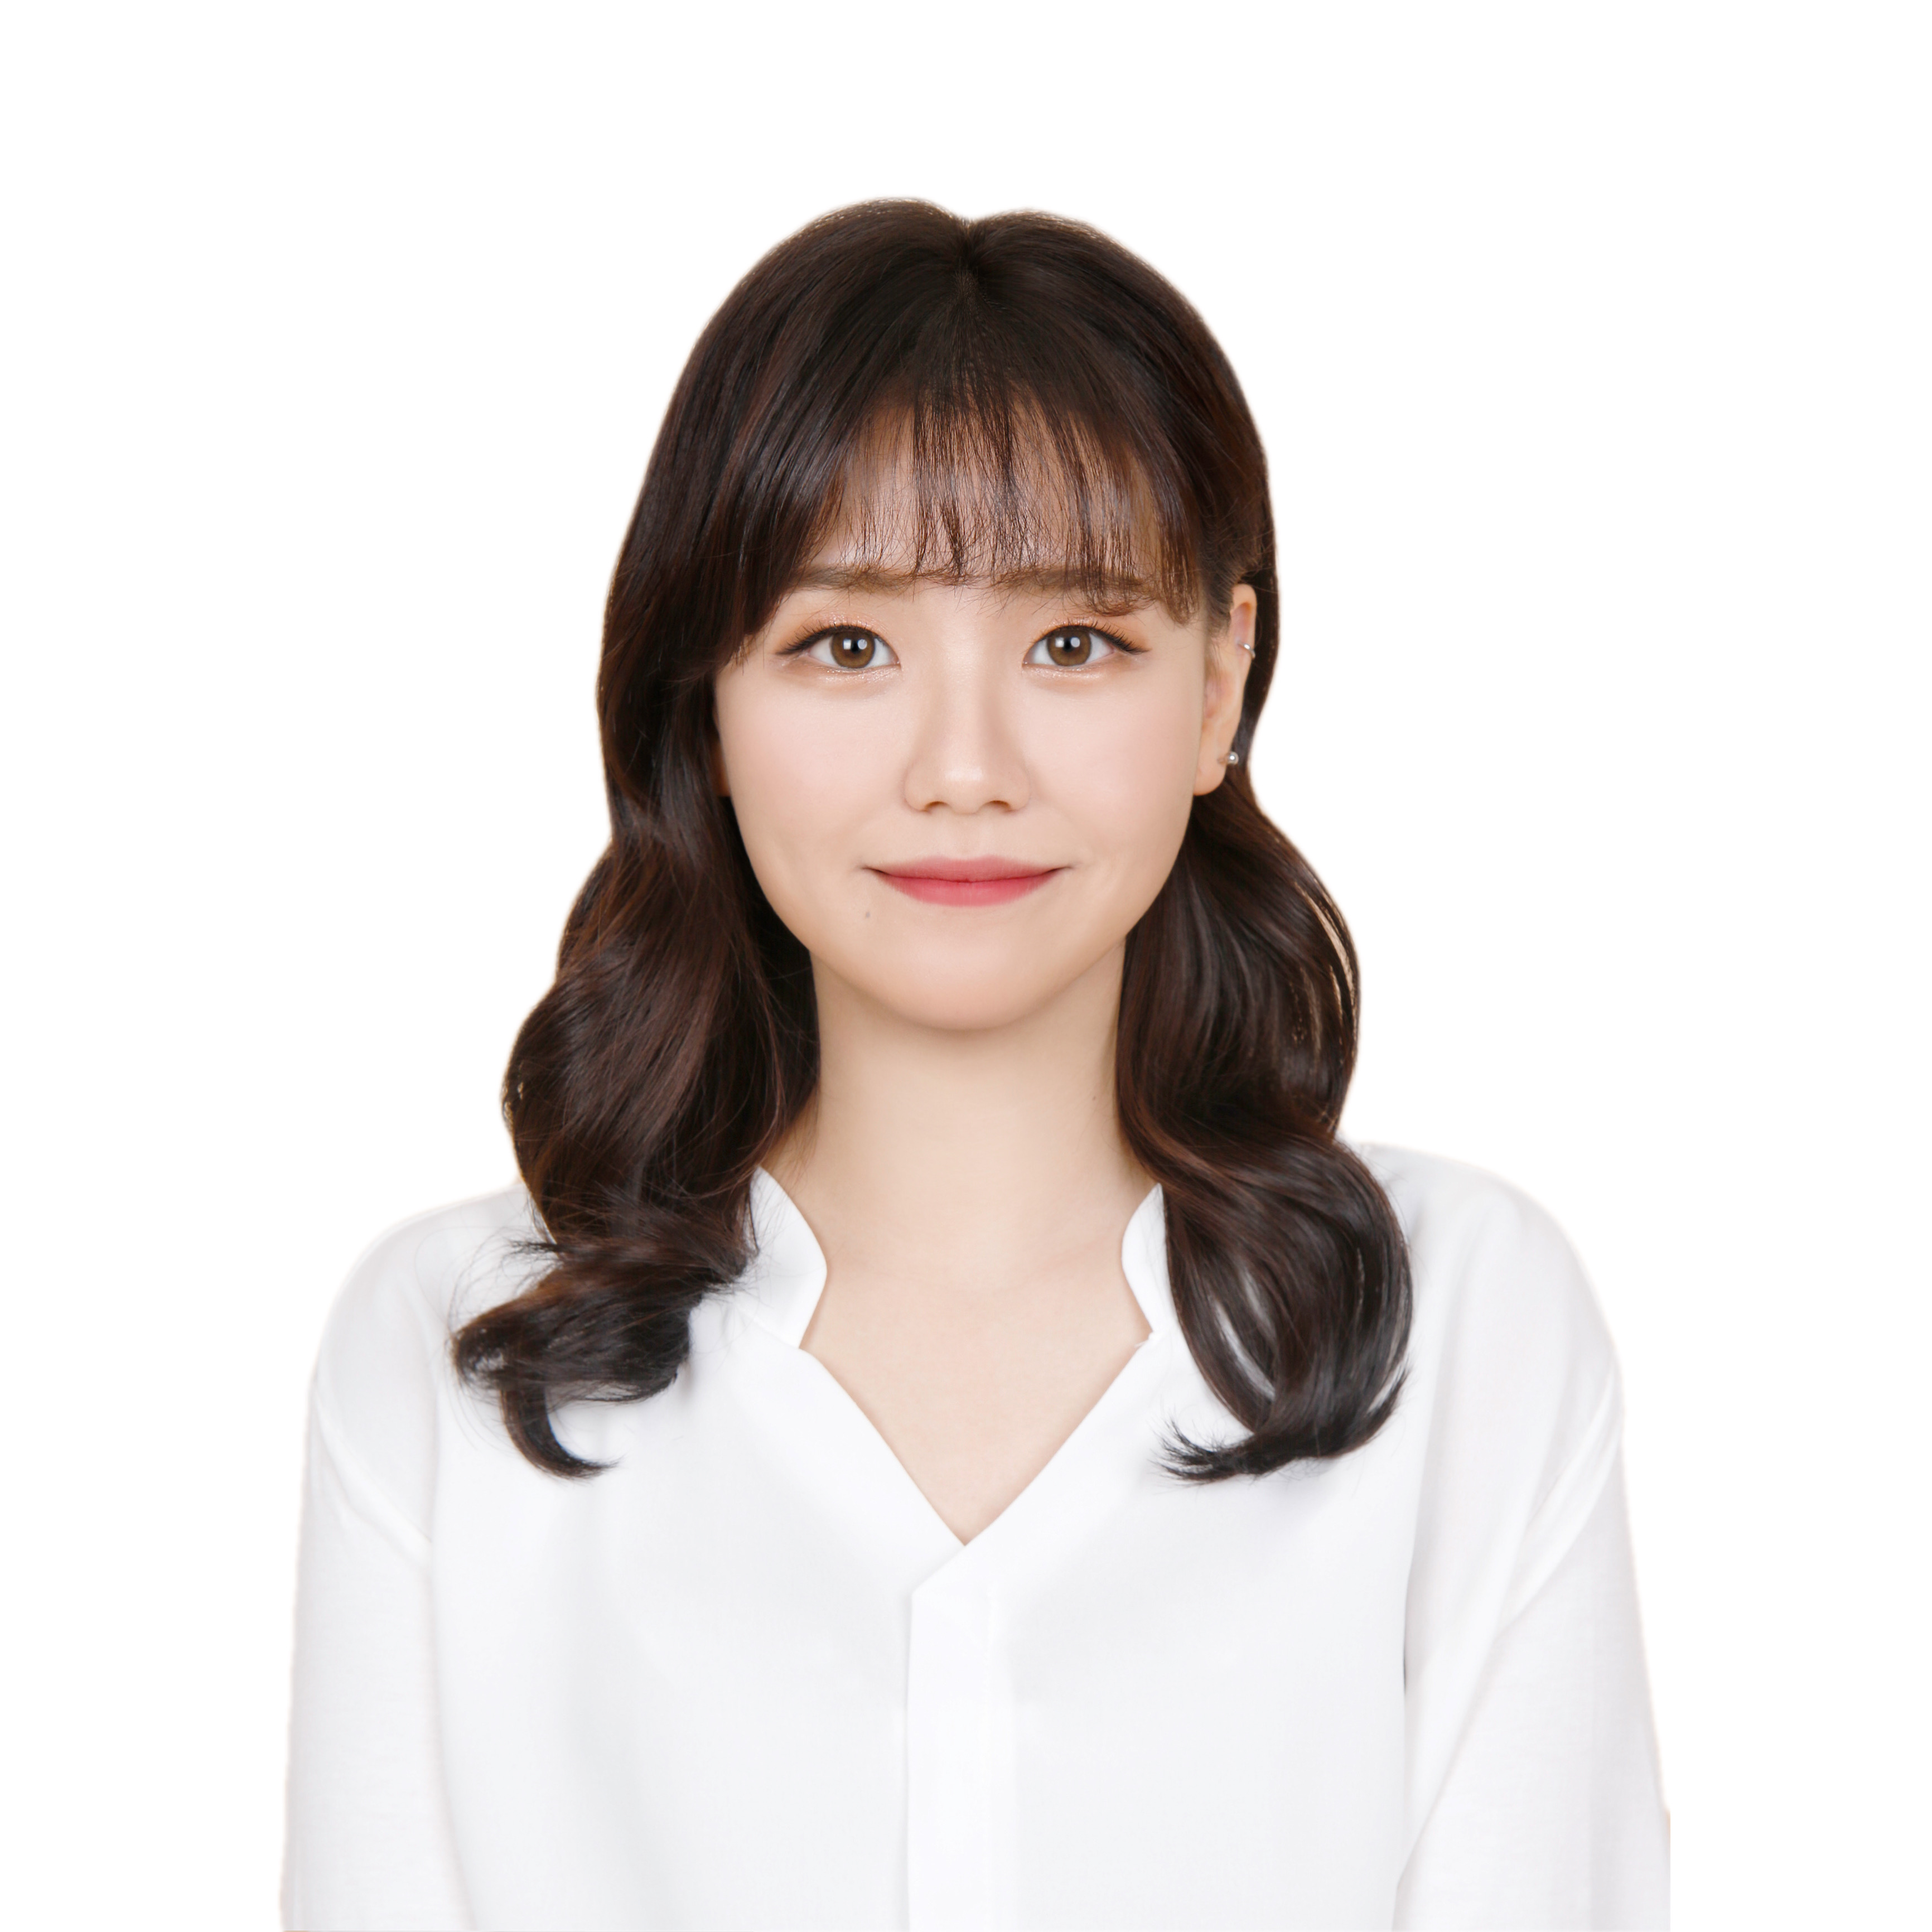 Yuna Lee (MS student)